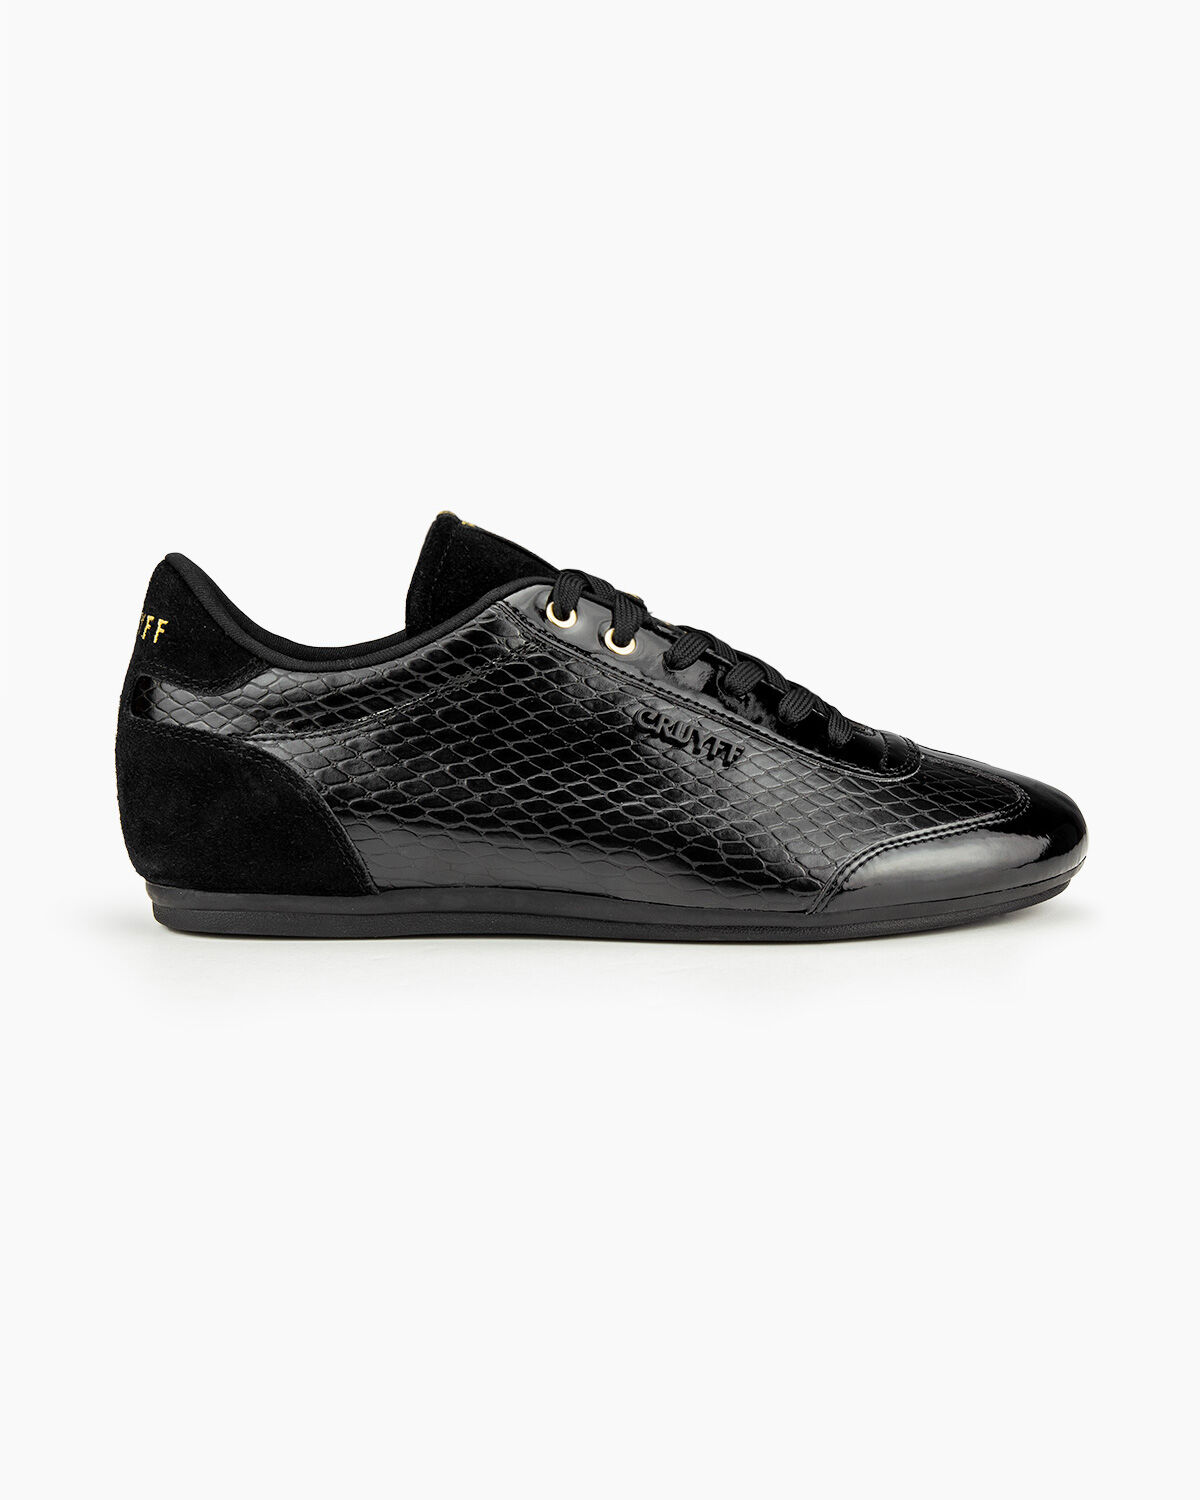 cruyff shoes black